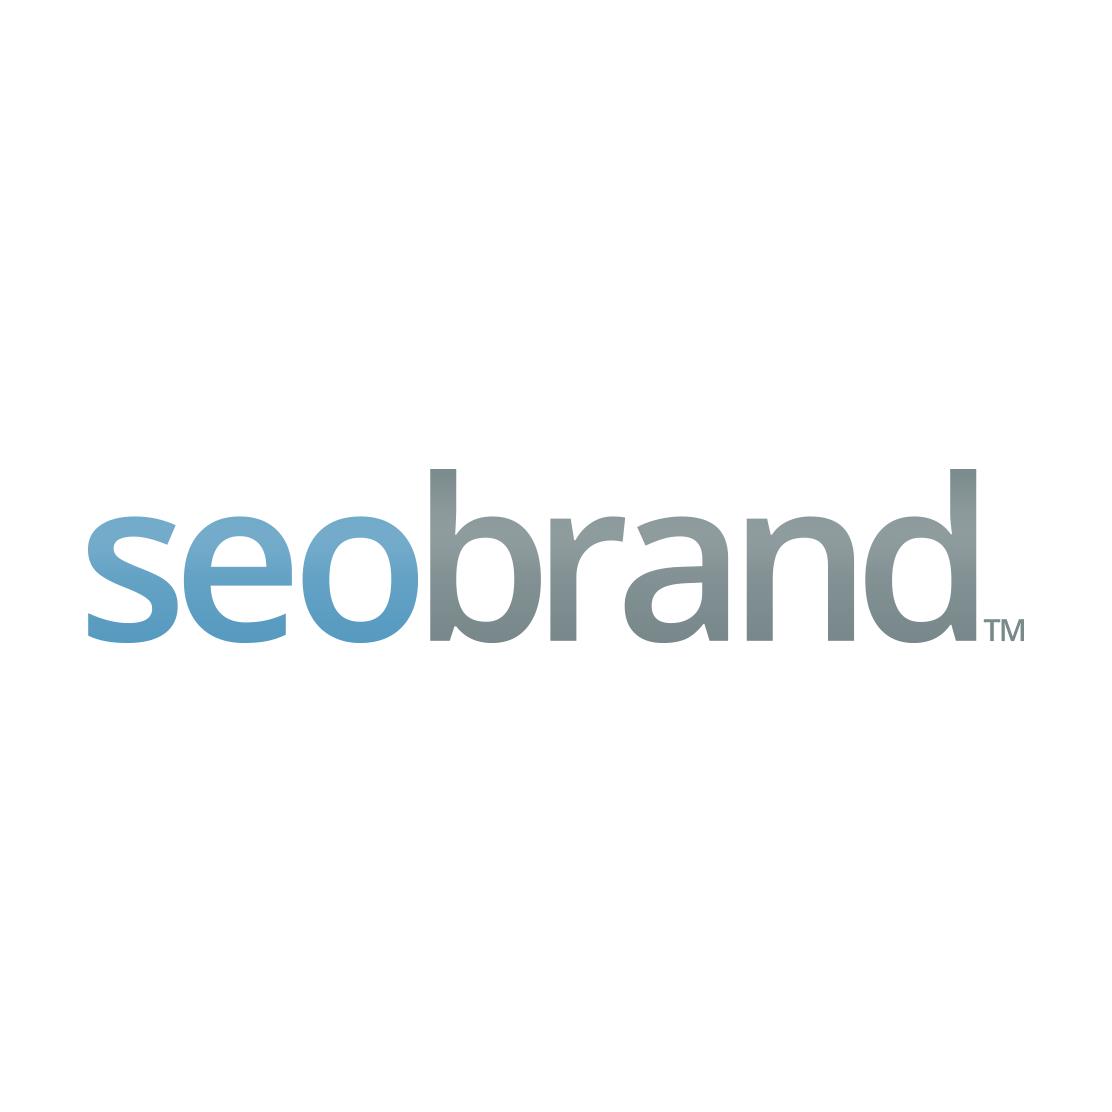 Best Philly SEO Company Logo: SEO Brand